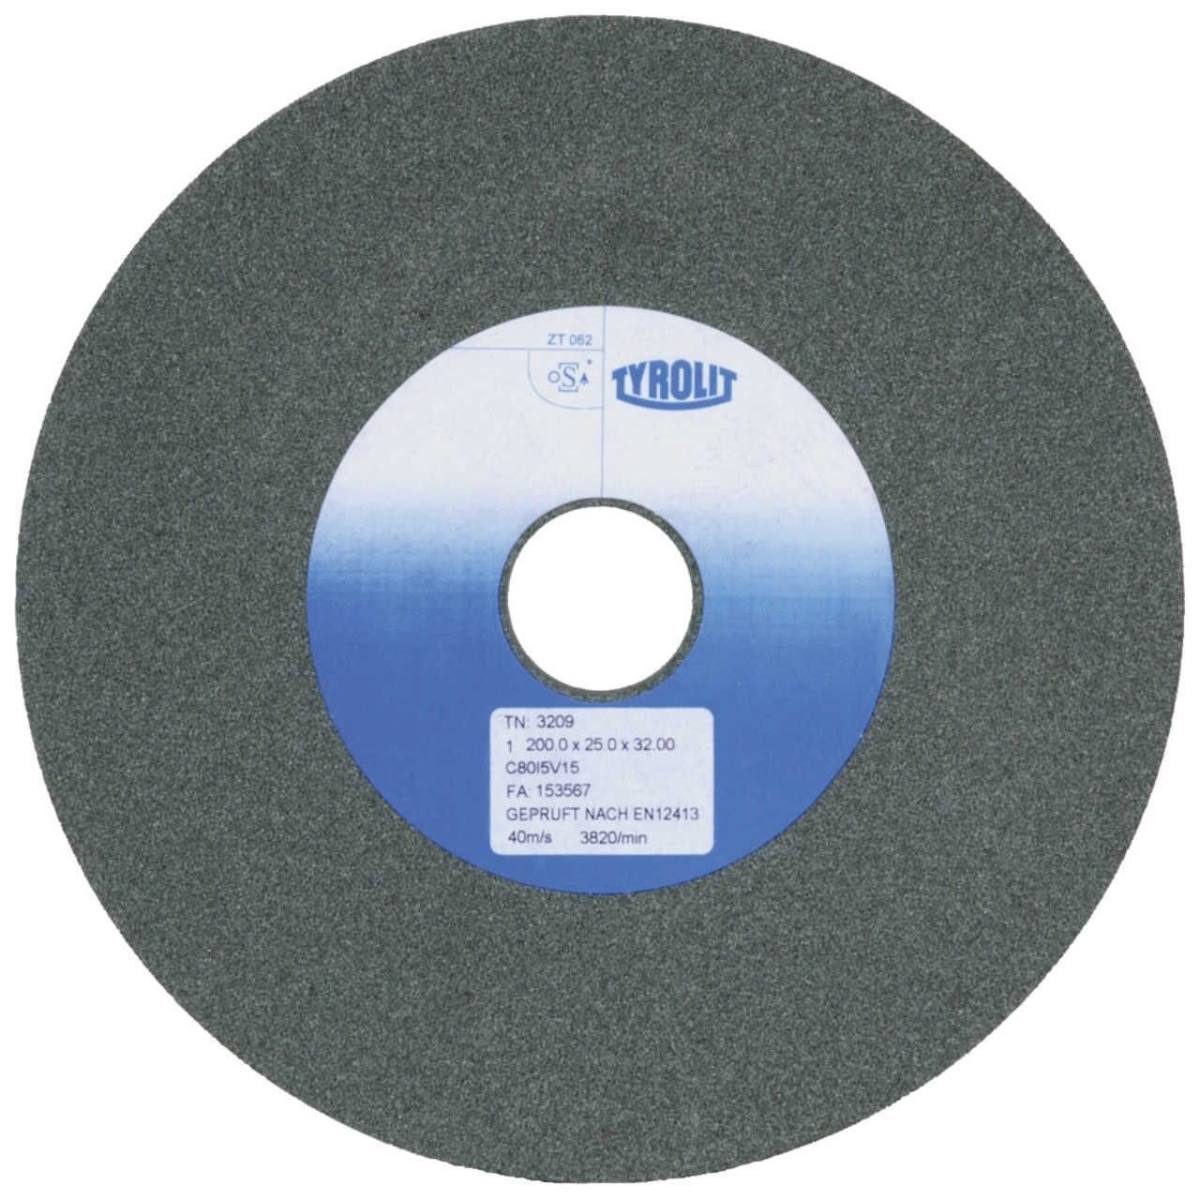 TYROLIT discos de desbaste cerámicos convencionales DxDxH 175x20x32 Para metales no férricos, forma: 1, Art. 34287485